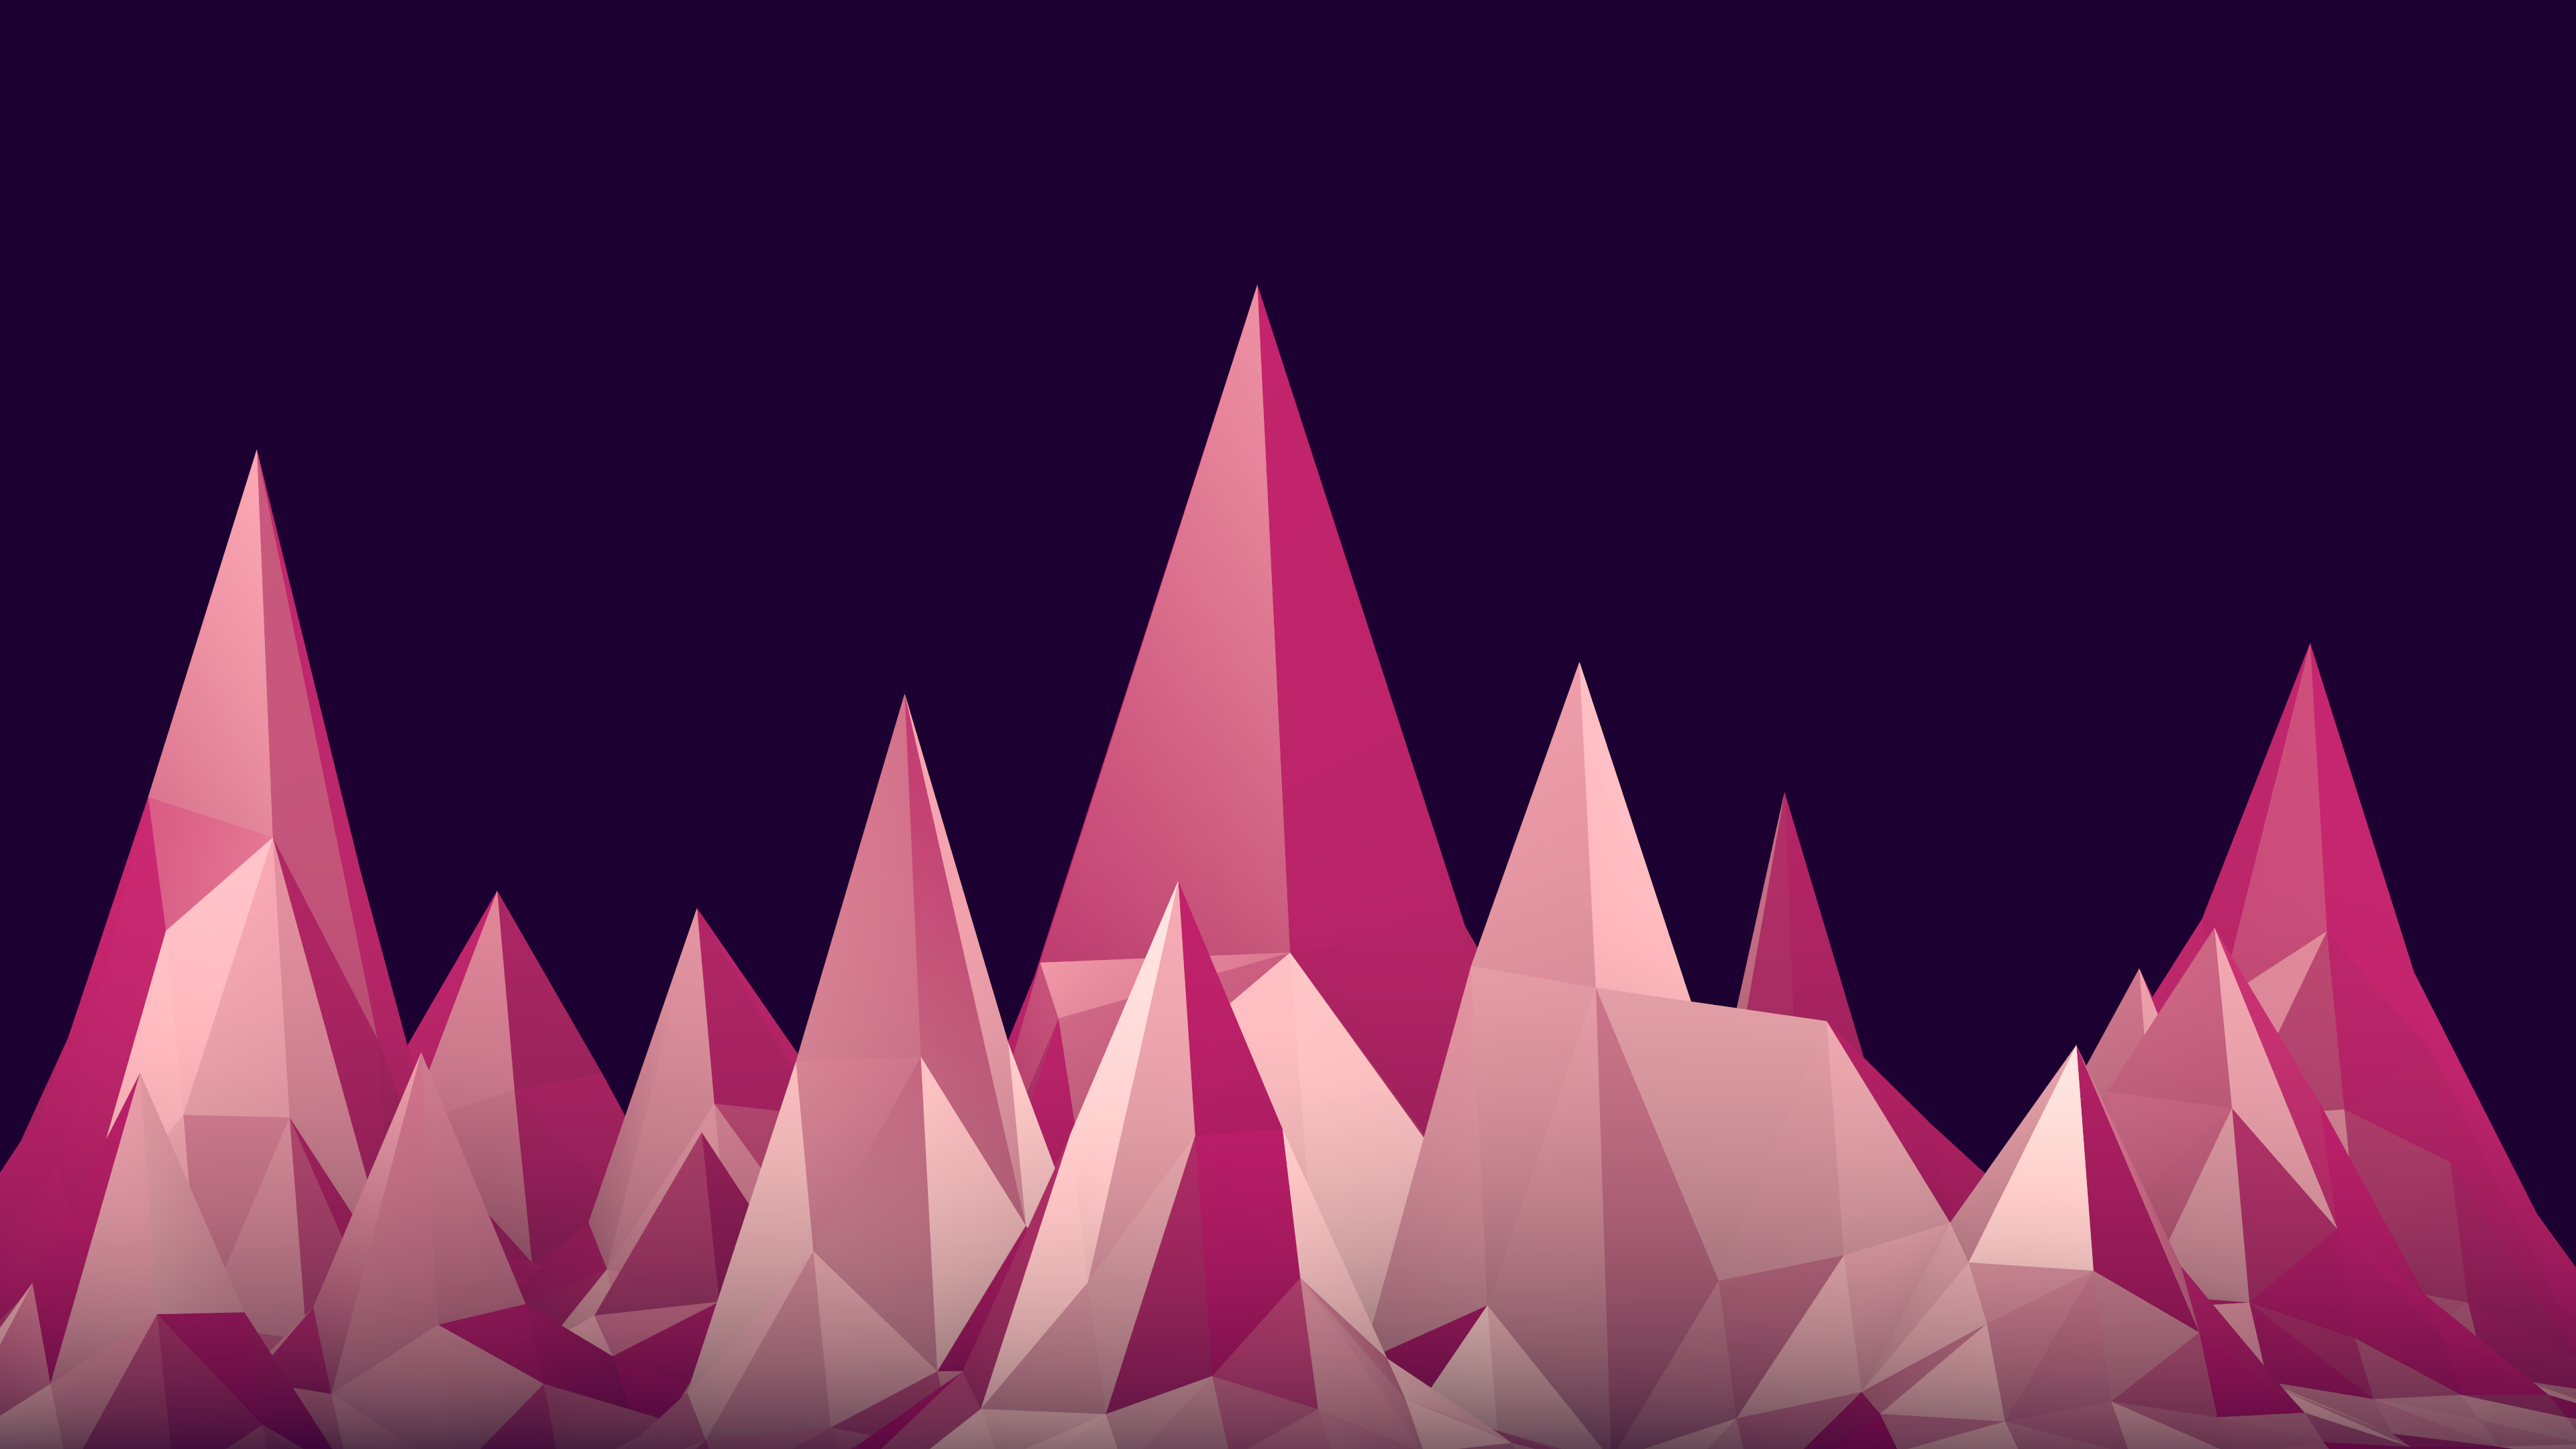 General 3840x2160 minimalism digital art simple background low poly CGI violet pink mountains geometry